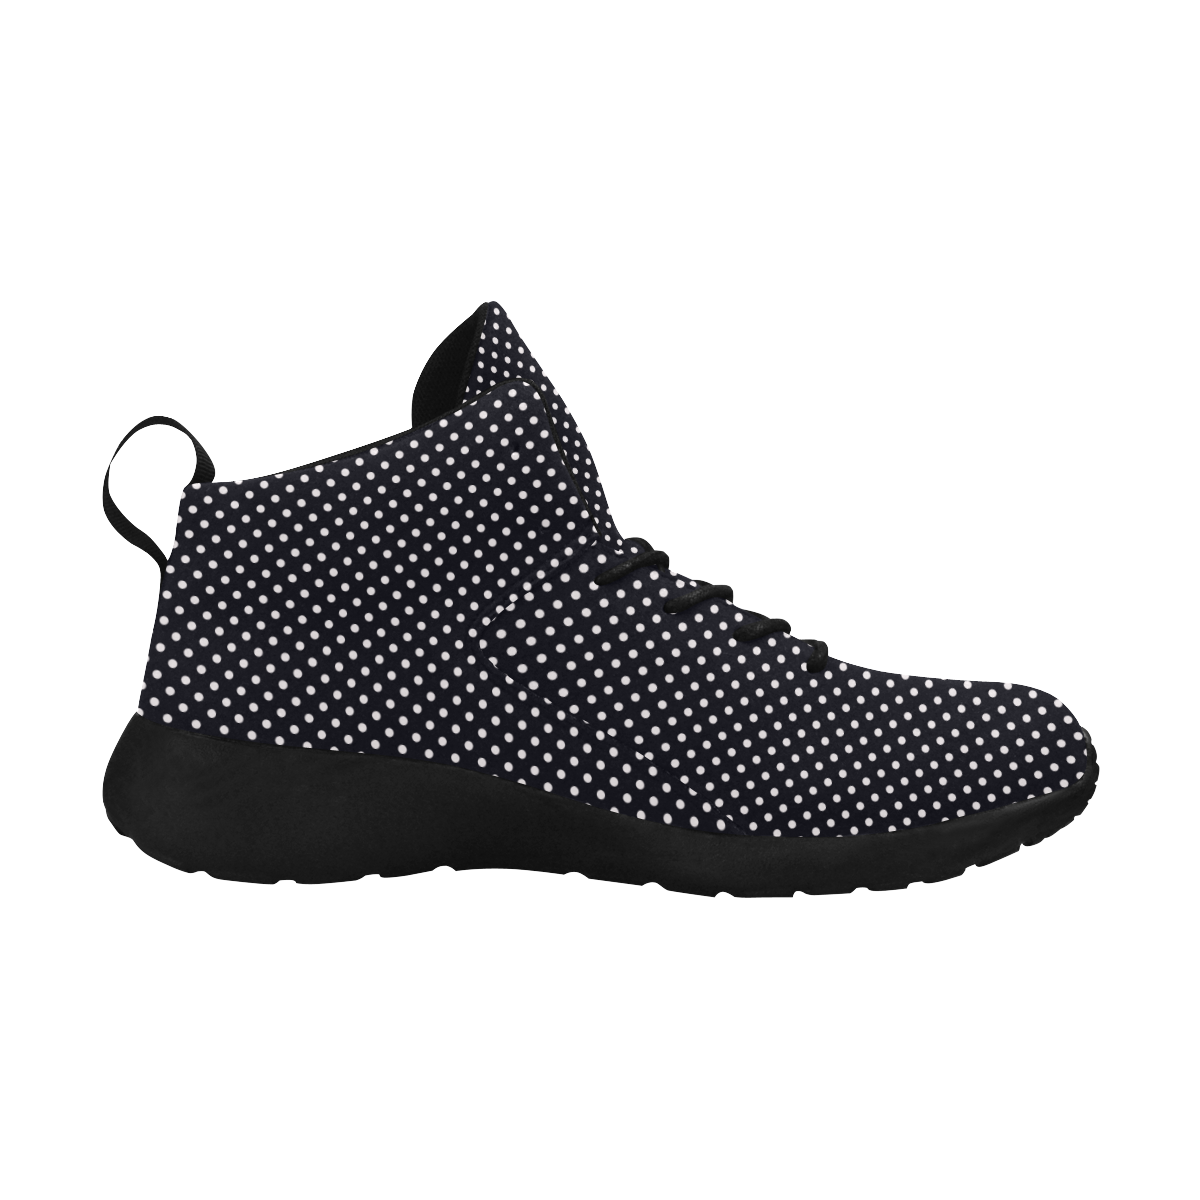 Black polka dots Women's Chukka Training Shoes (Model 57502)